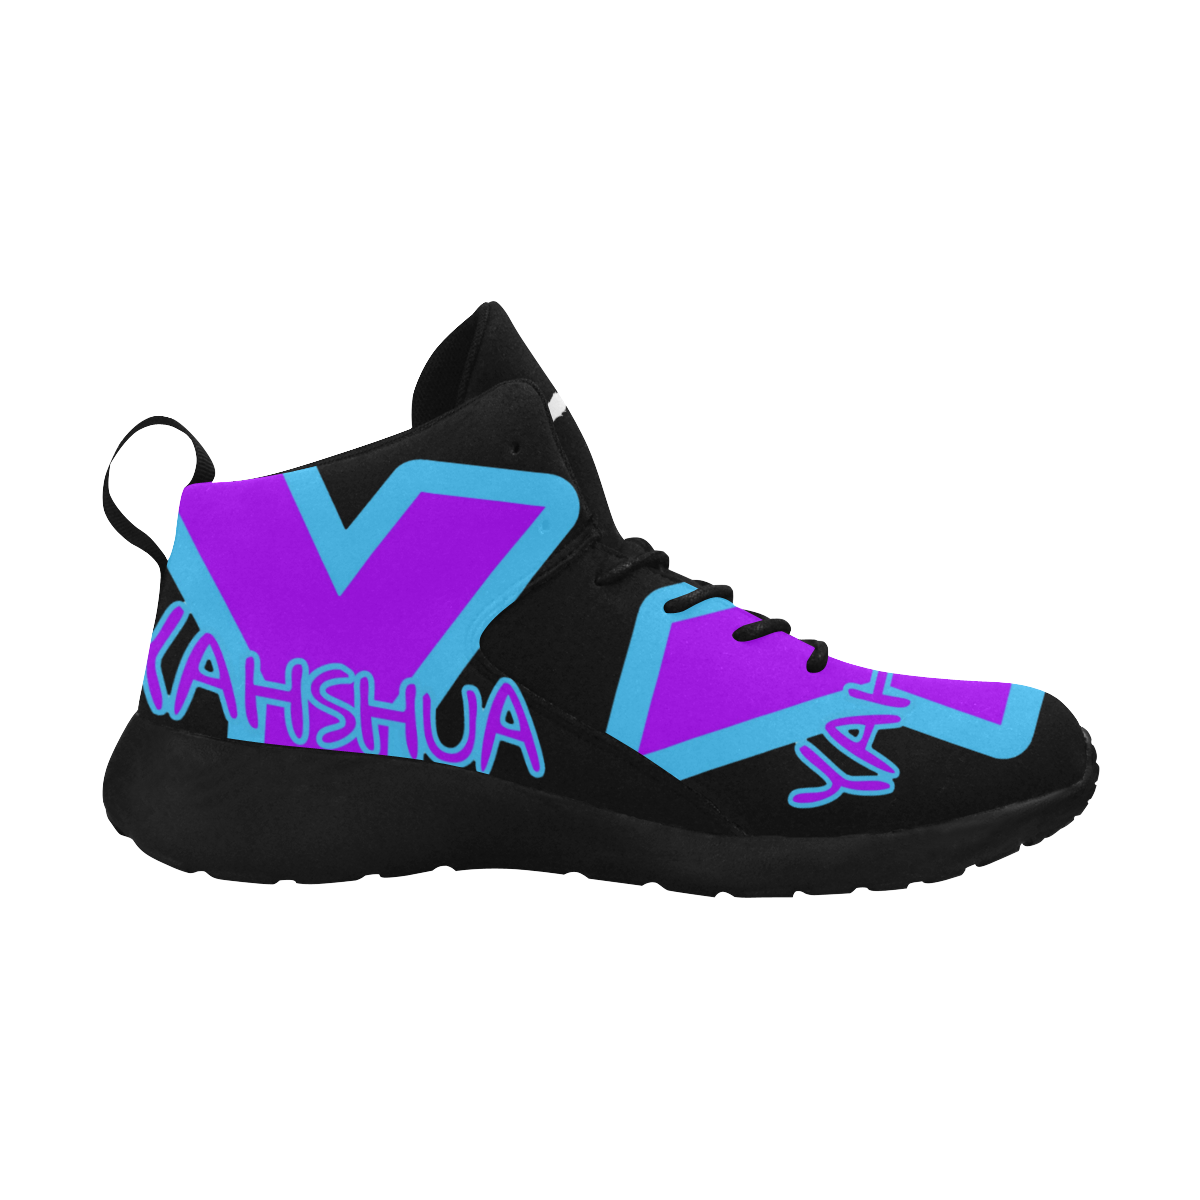 Yah infinity Purple Men's Chukka Training Shoes (Model 57502)